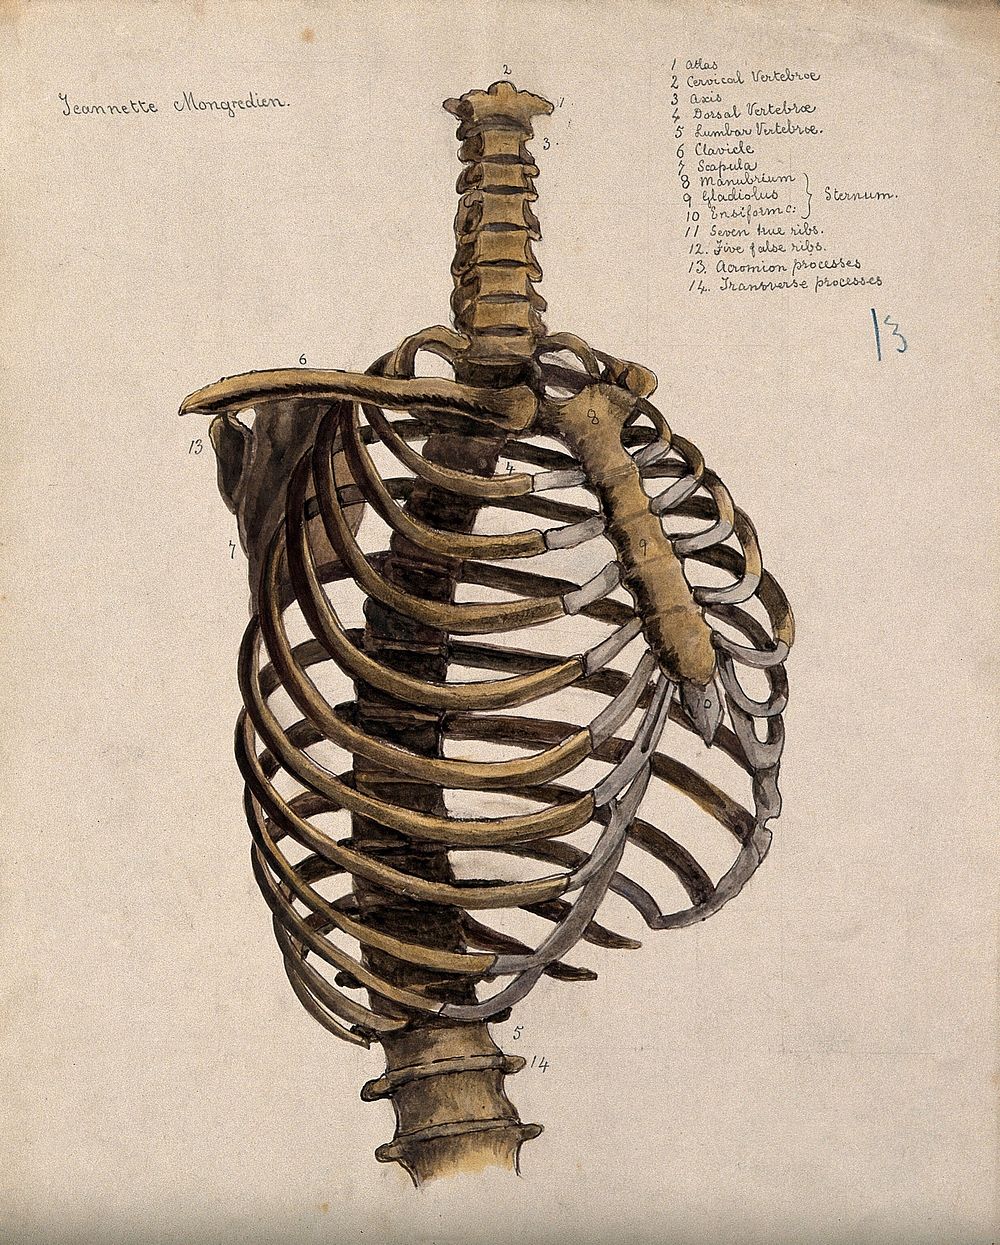 Vertebral column and ribcage. Watercolour by J. Mongrédien, ca. 1880.